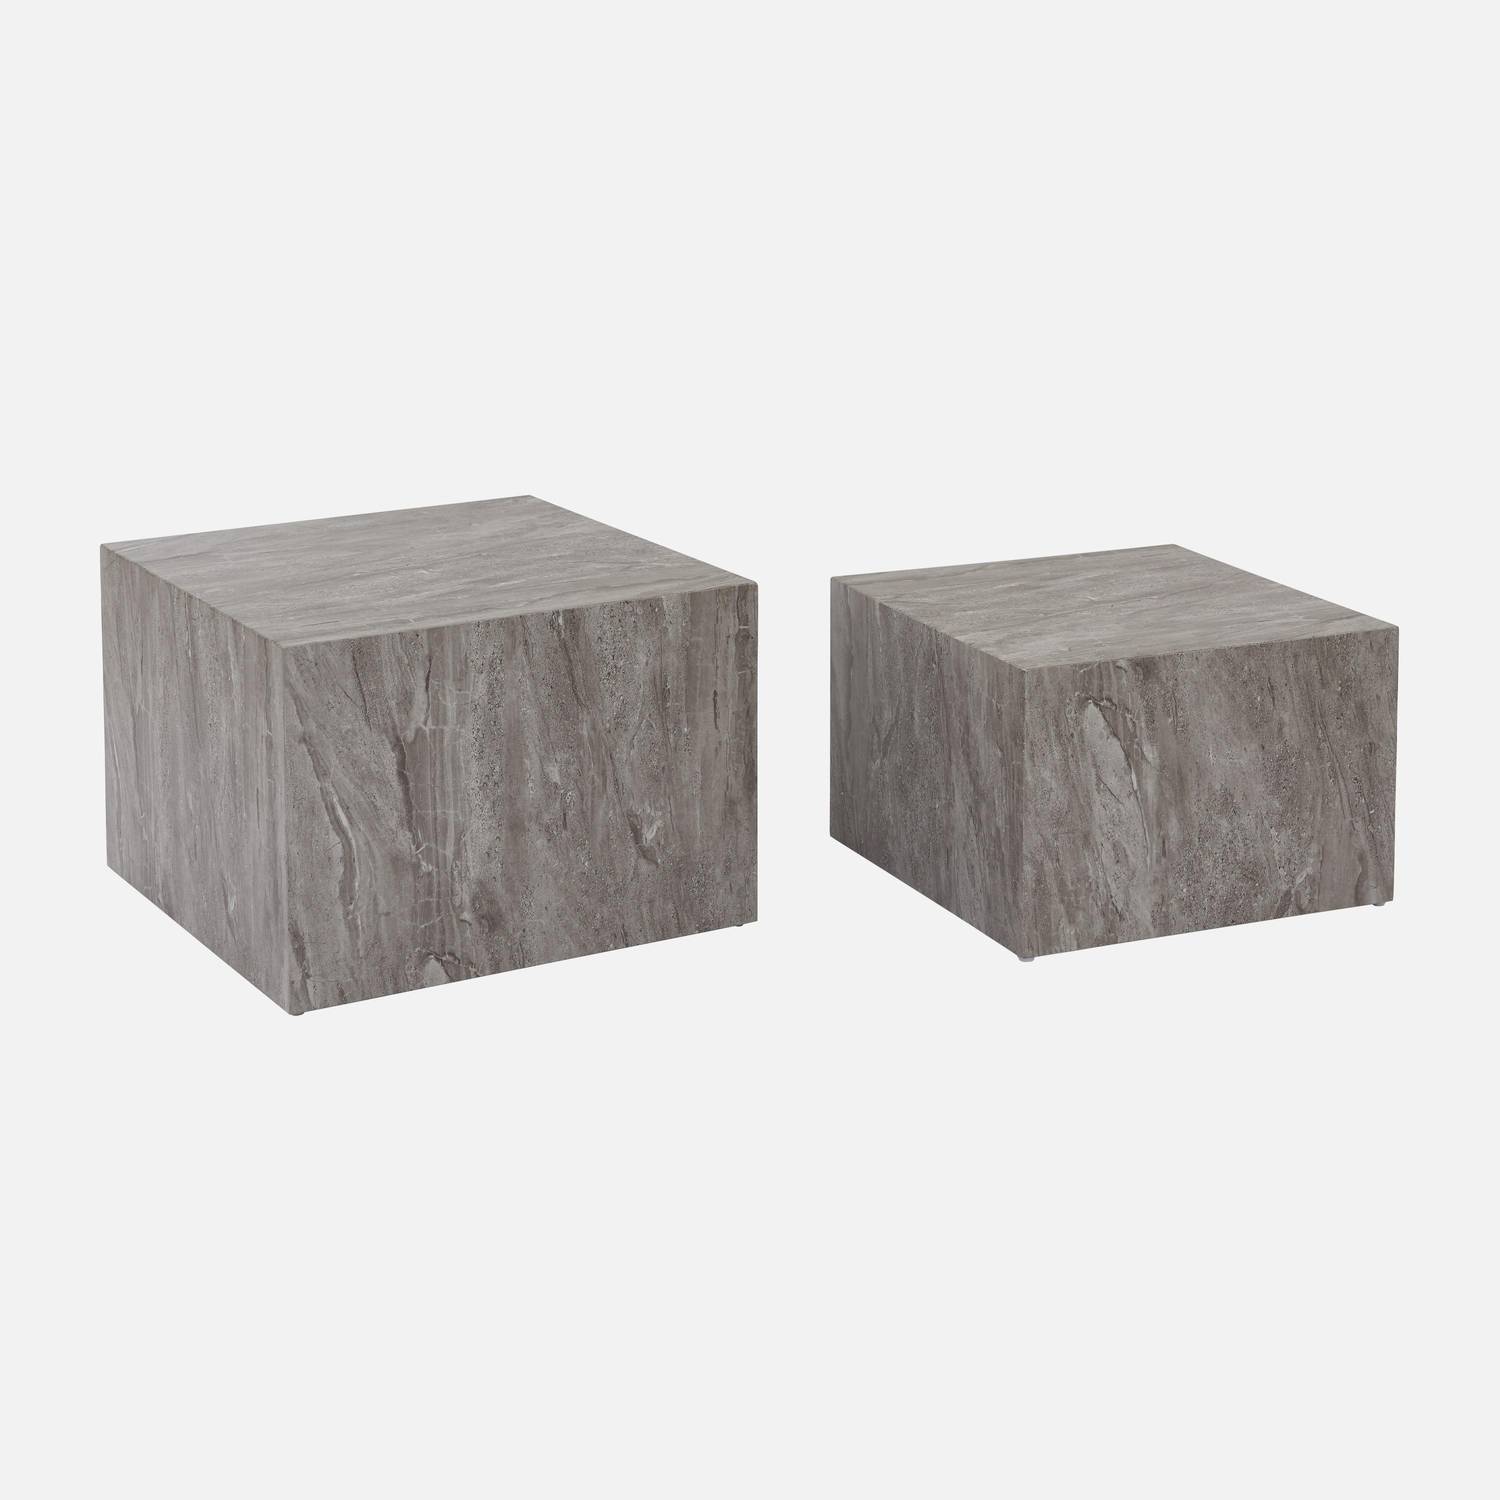 Set van 2 grijze salontafels met marmereffect, Paros, L 58 x B 58 x H 40cm / L 50 x B 50 x H 33cm Photo4